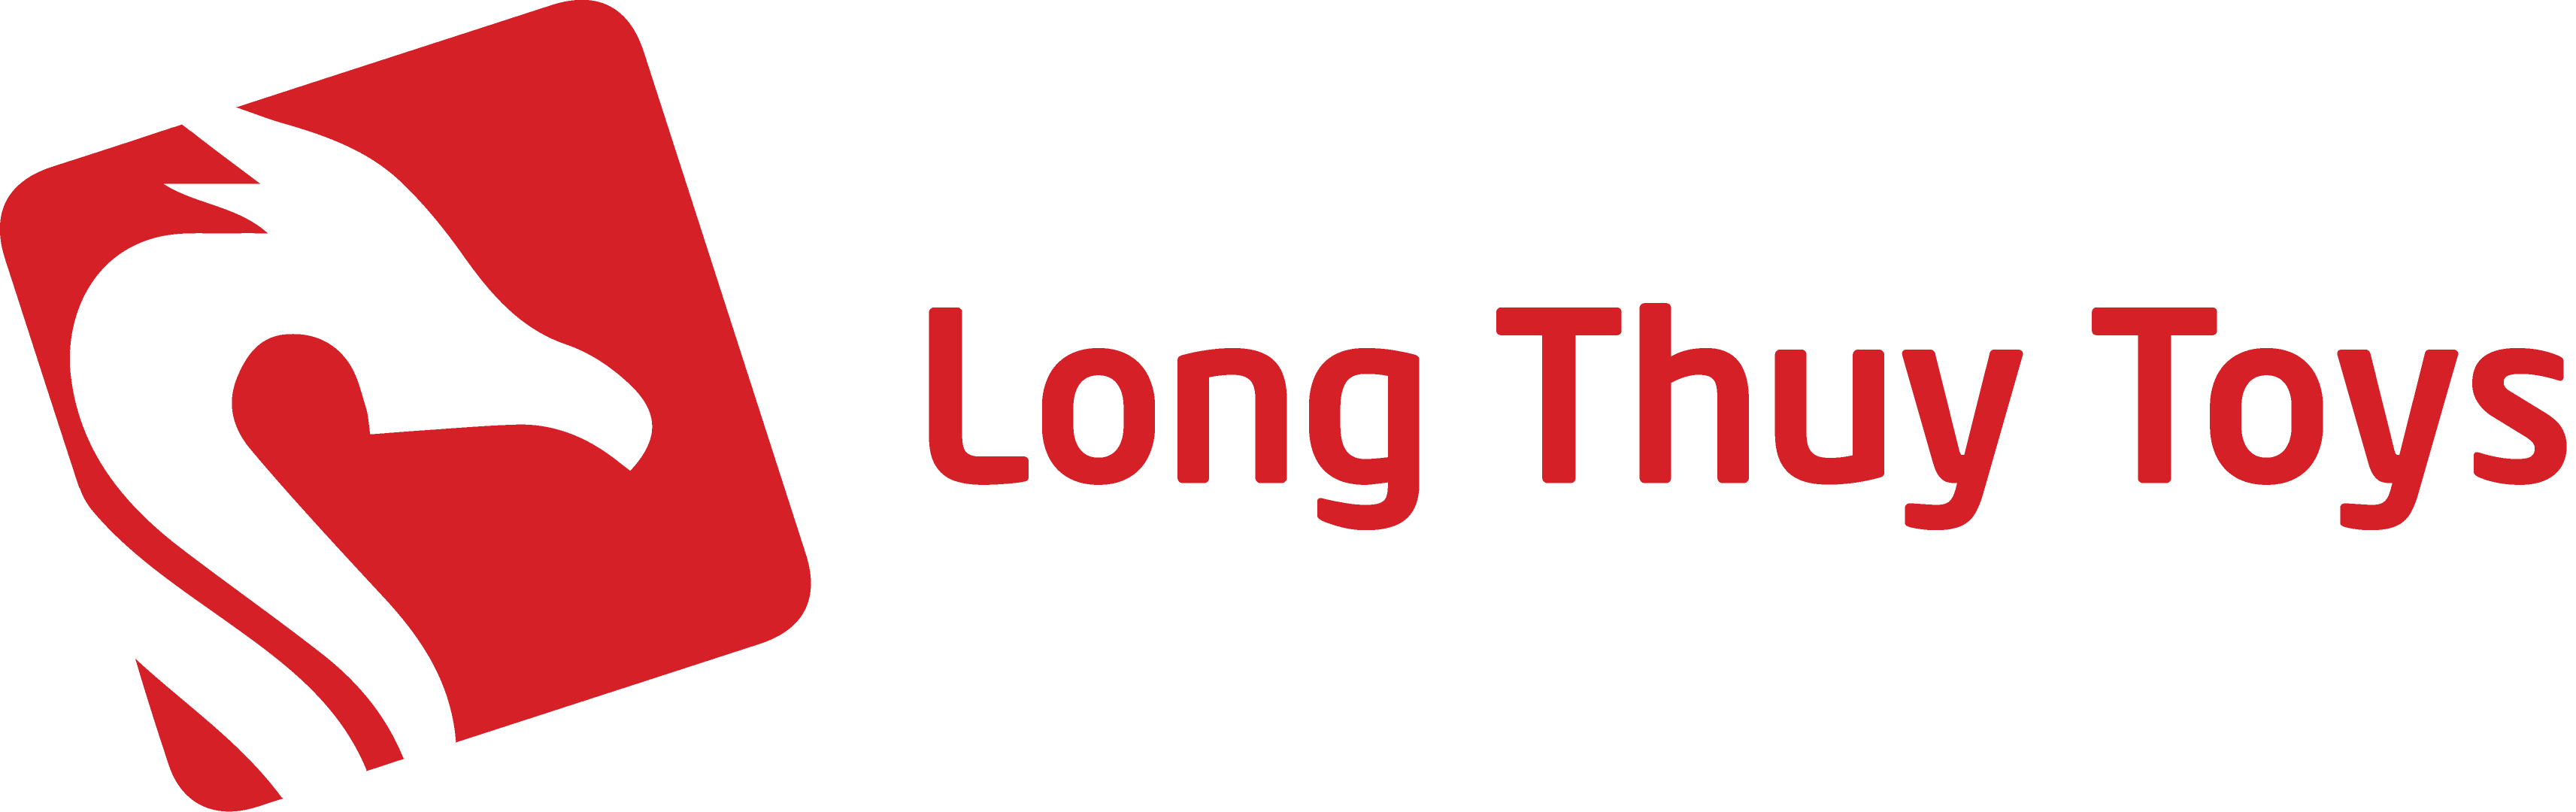 Long Thuy